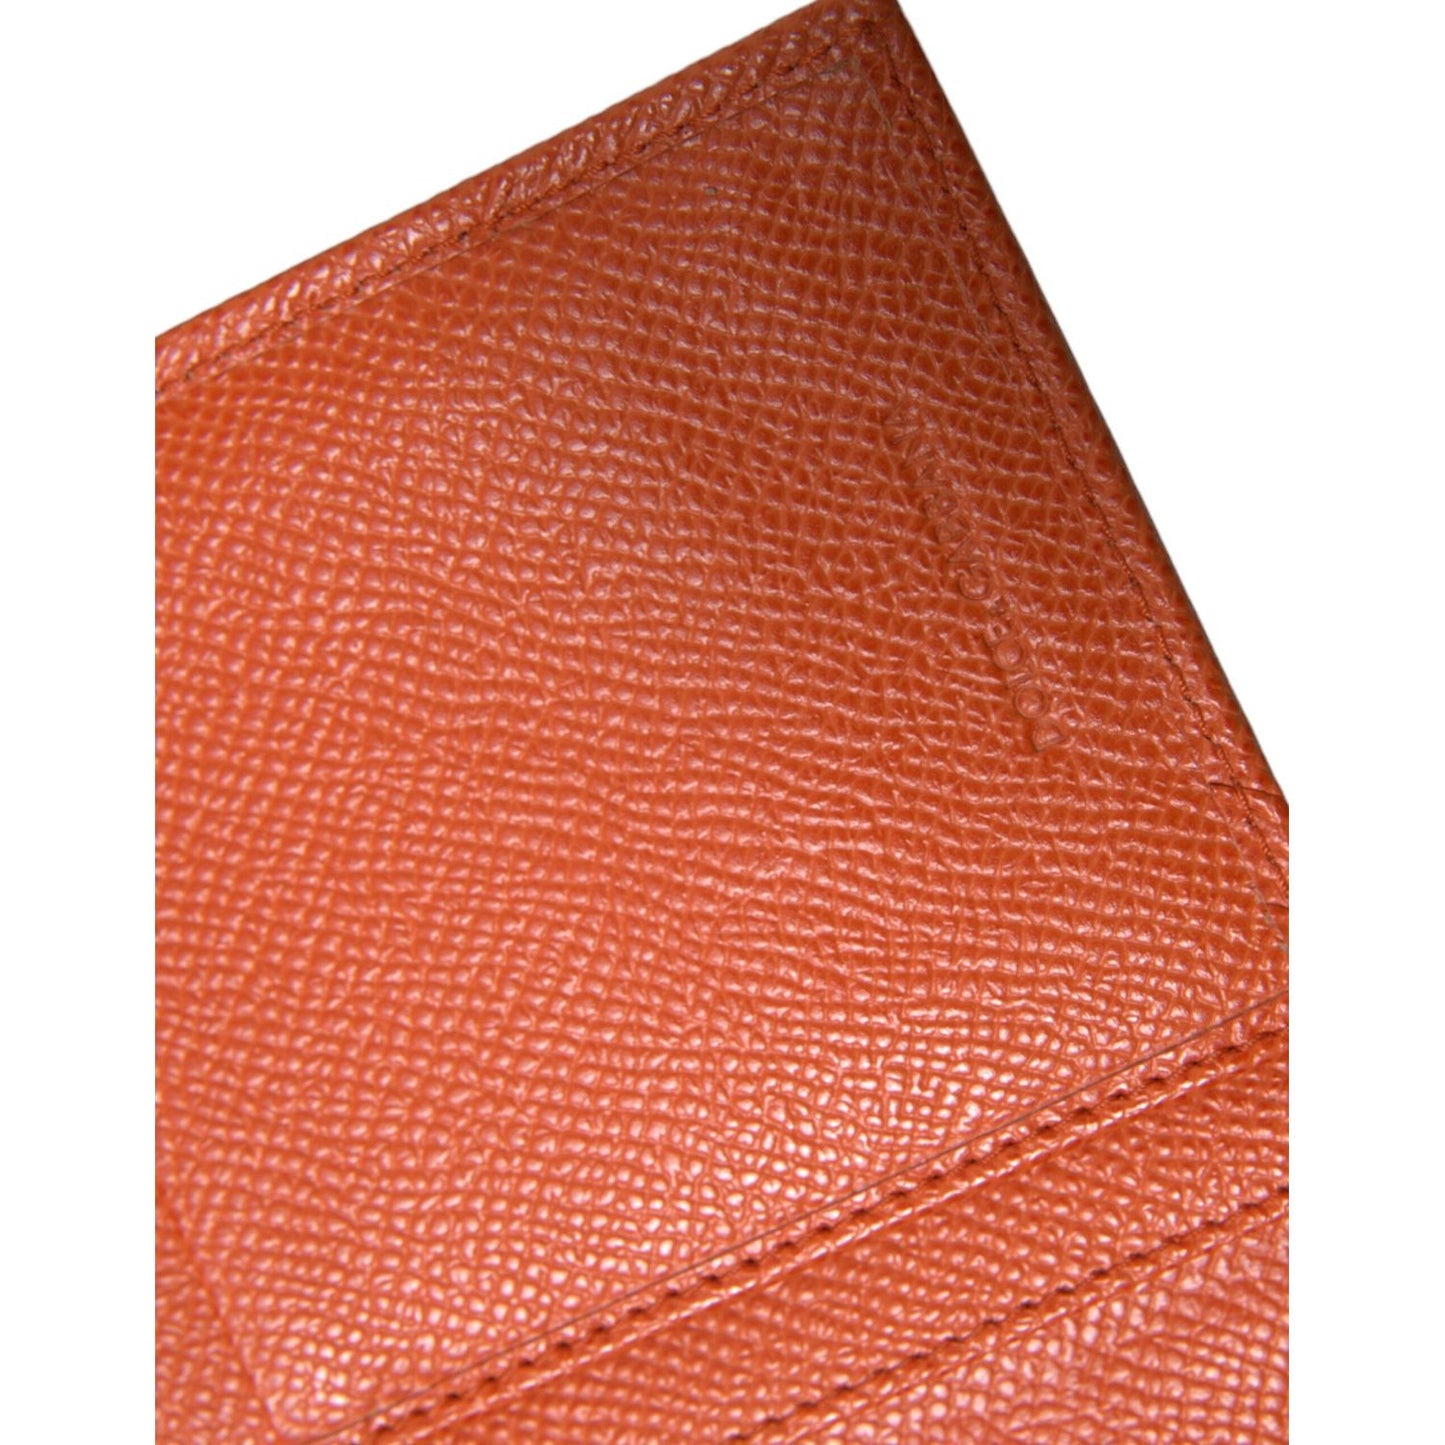 Dolce & Gabbana | Chic Orange Crocodile Leather Wallet| McRichard Designer Brands   